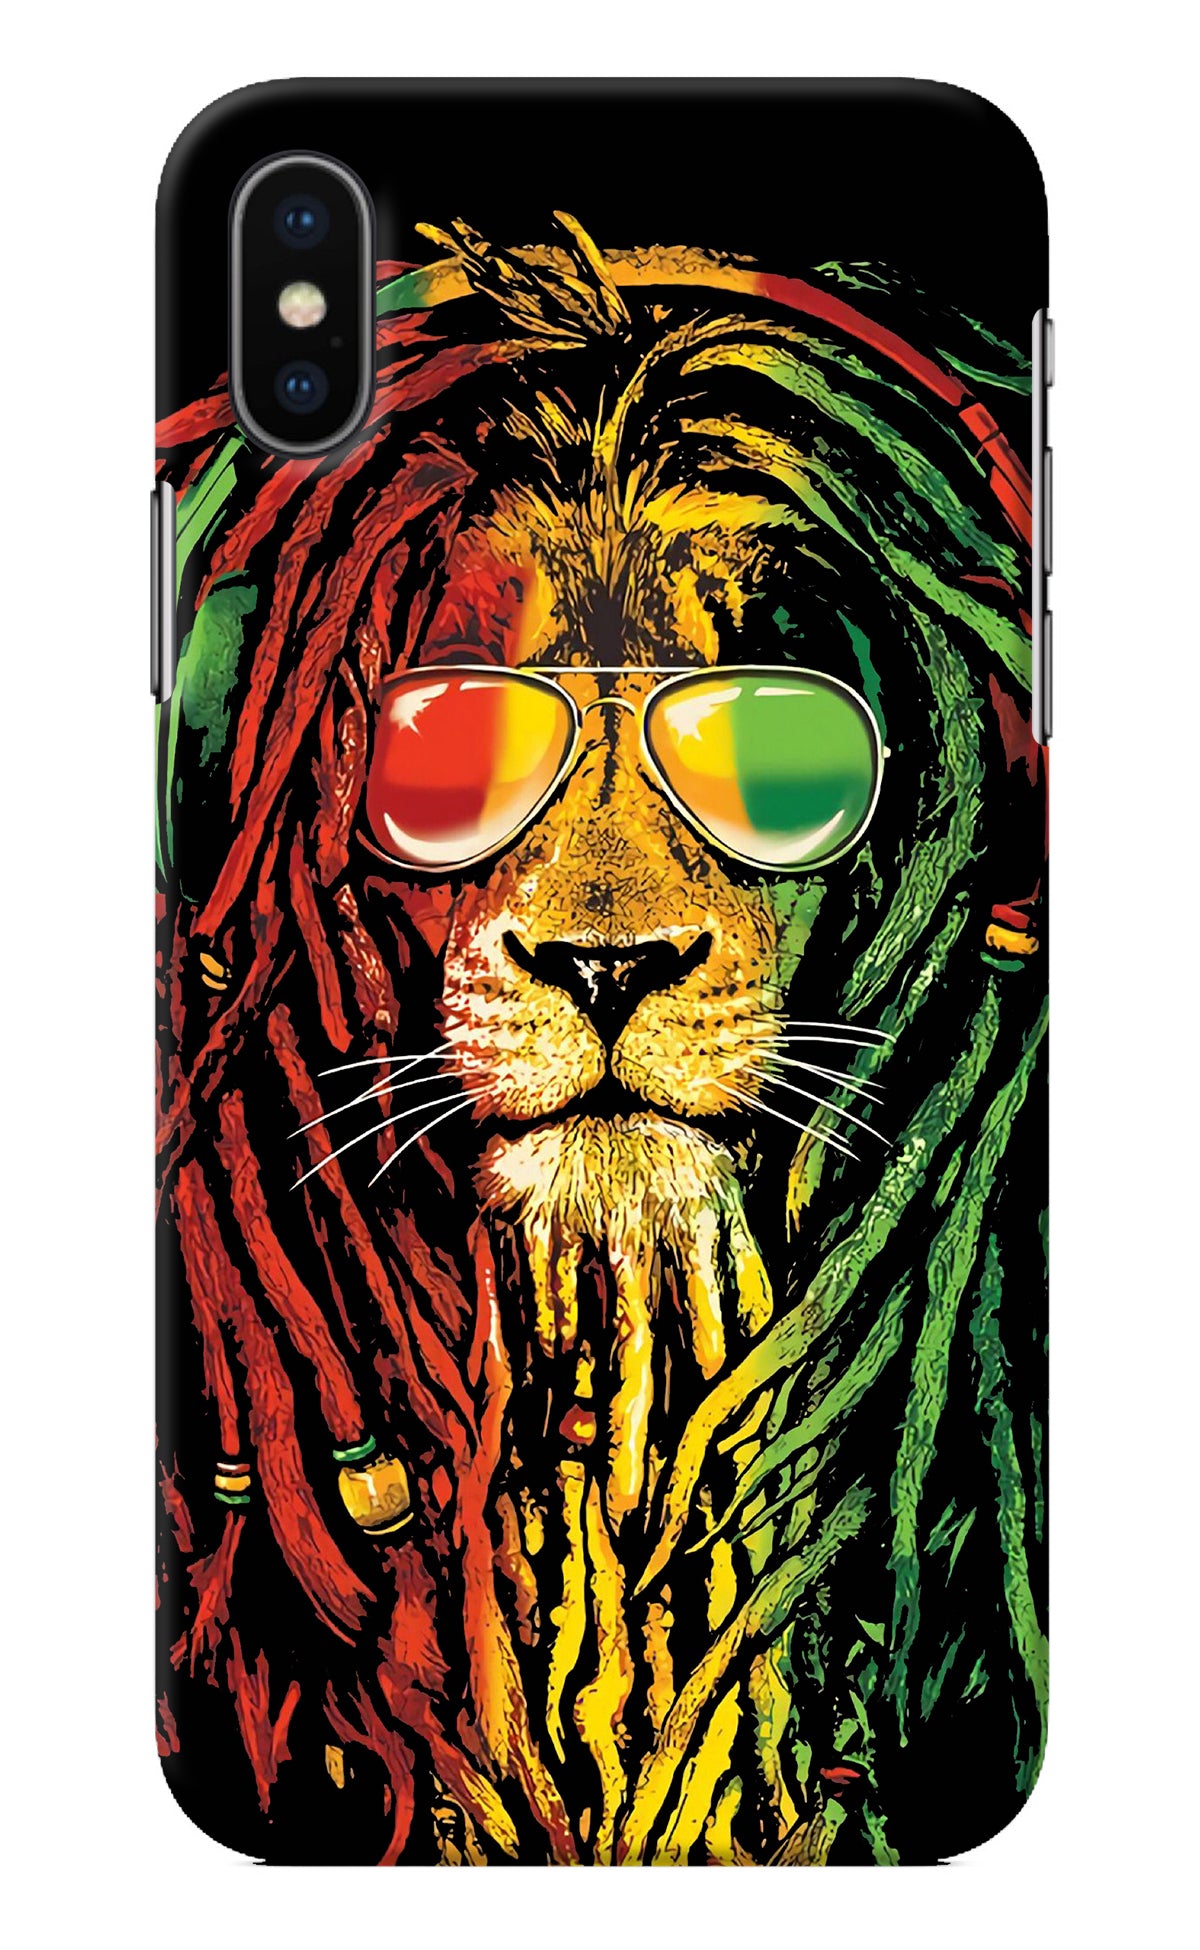 Rasta Lion iPhone X Back Cover